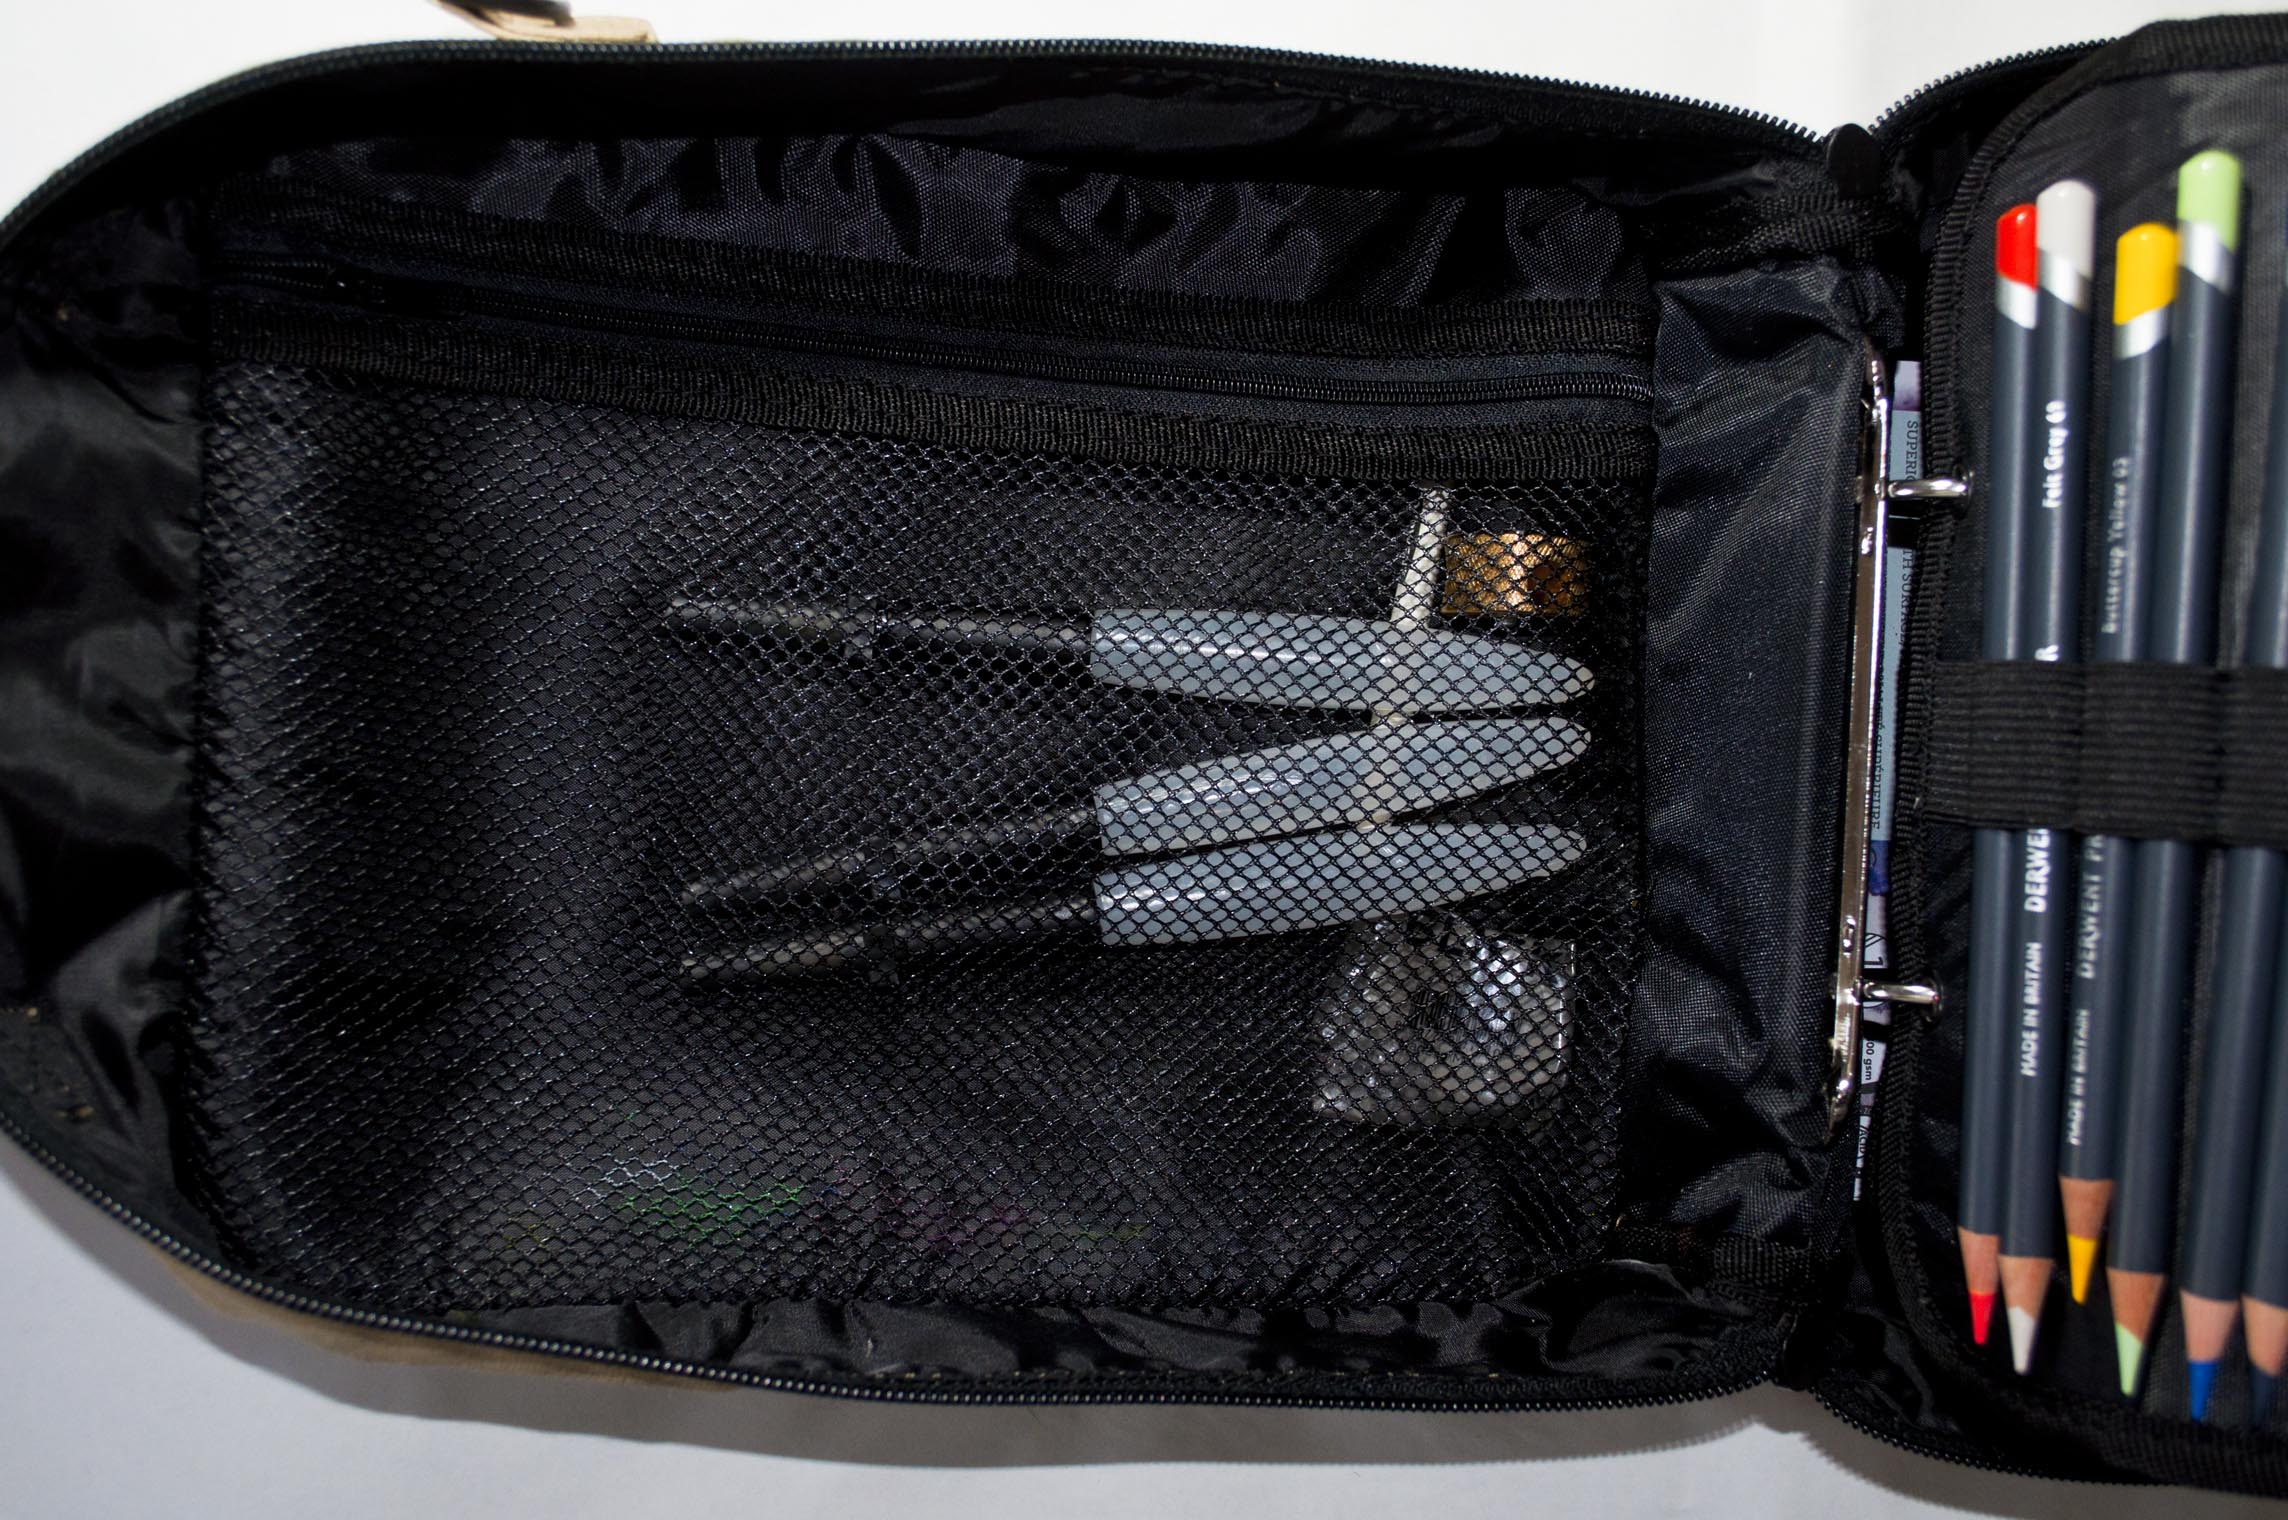 Derwent : Carry-All Pencil Storage Bag